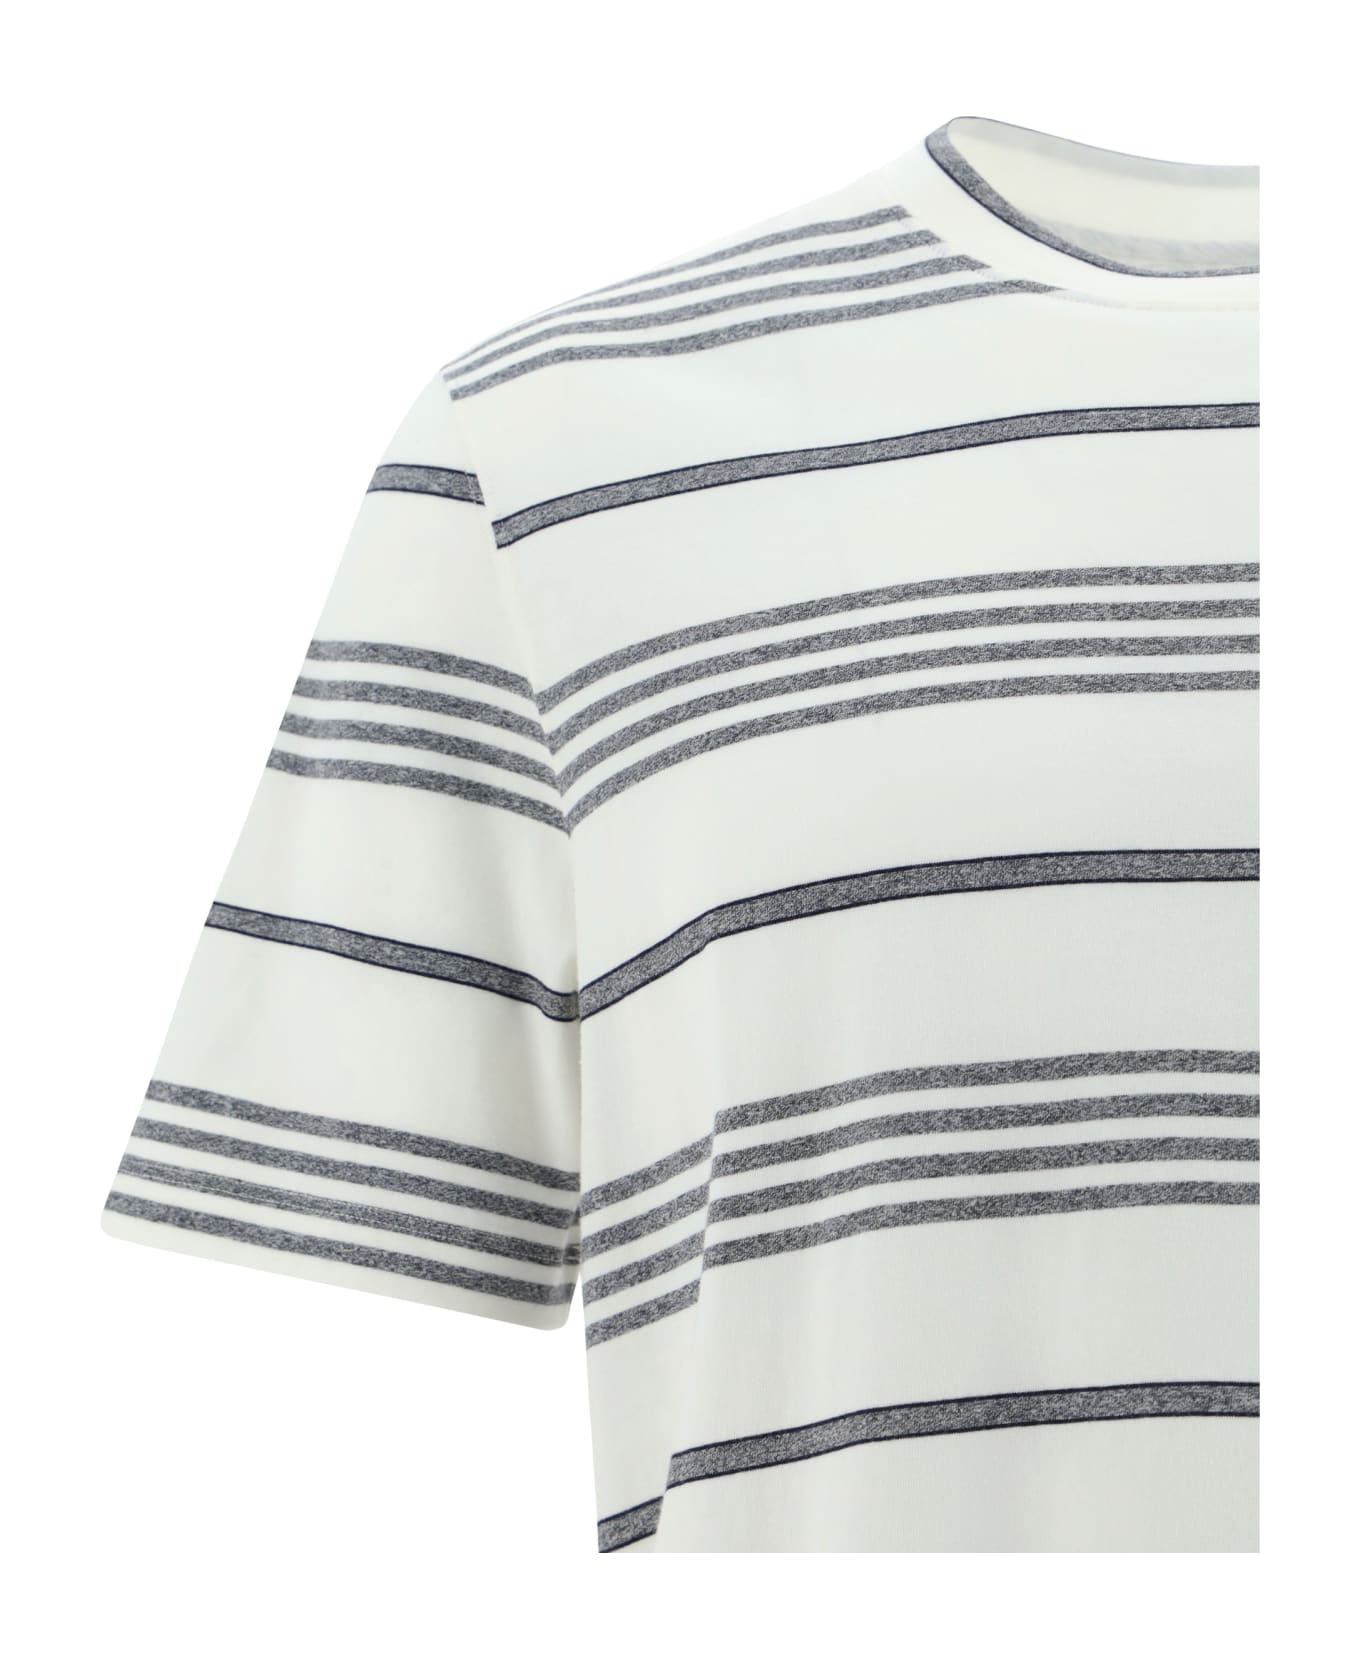 Brunello Cucinelli T-shirt - Off White/grigio/blu